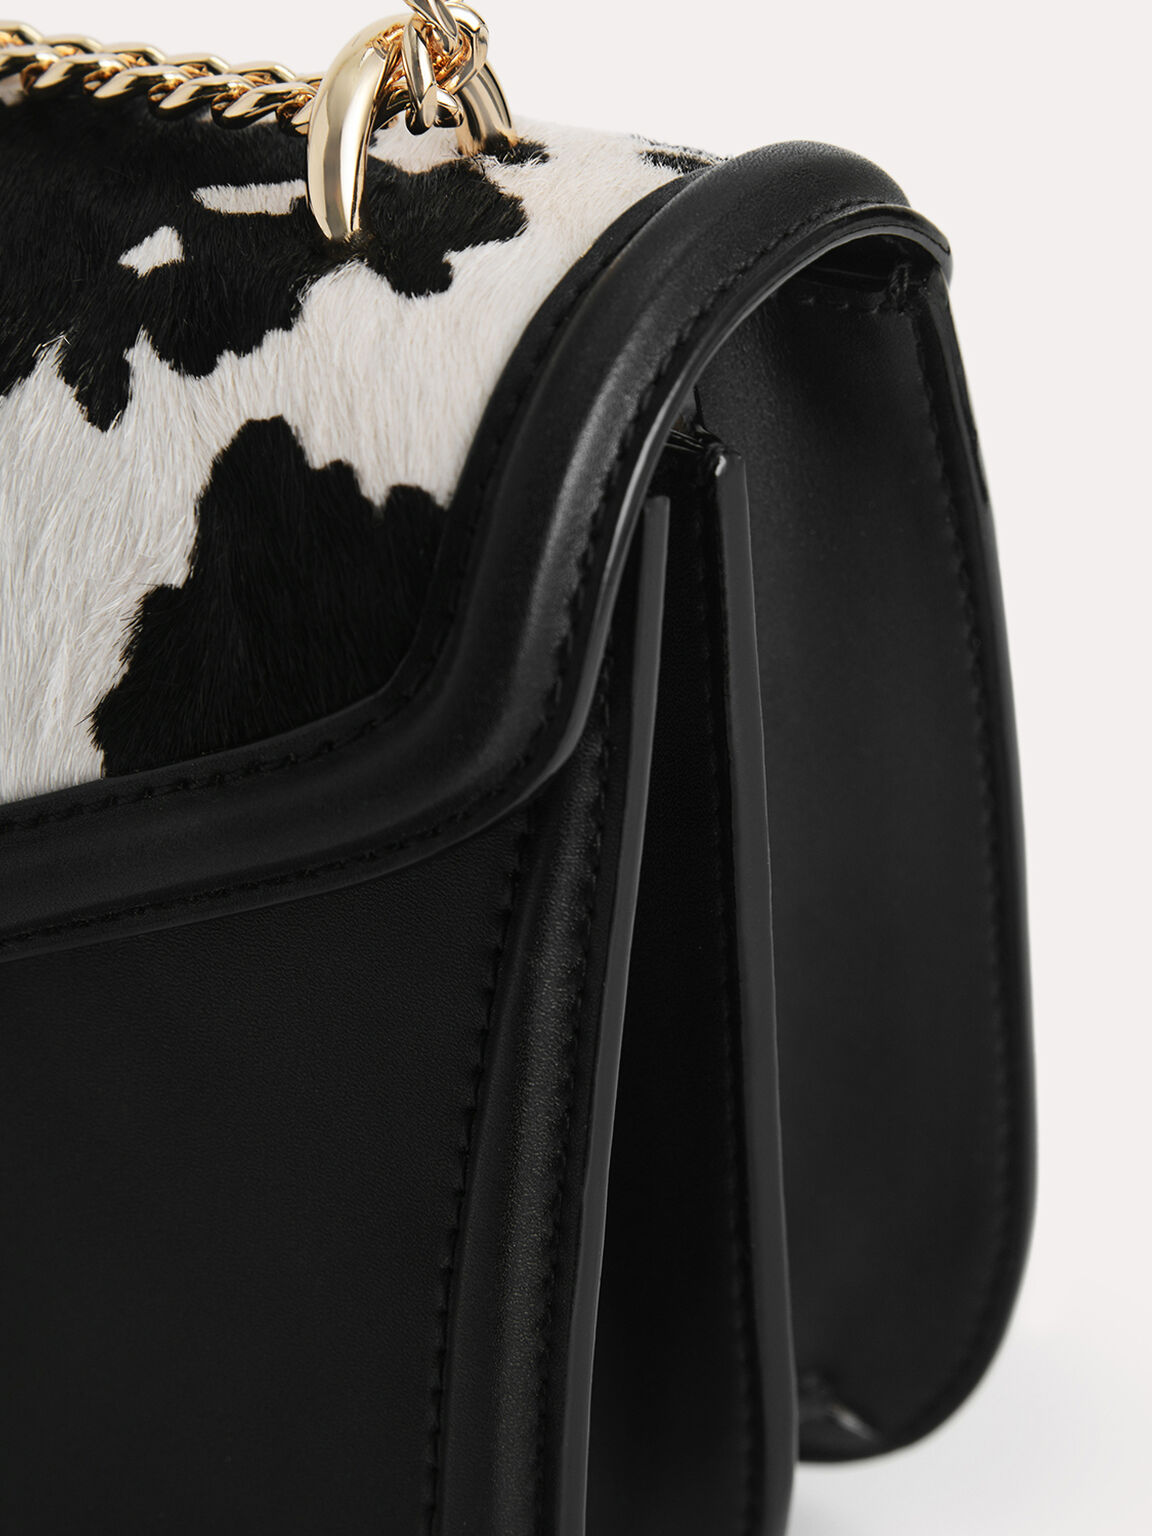 Cow-Printed Leather Shoulder Bag, Multi